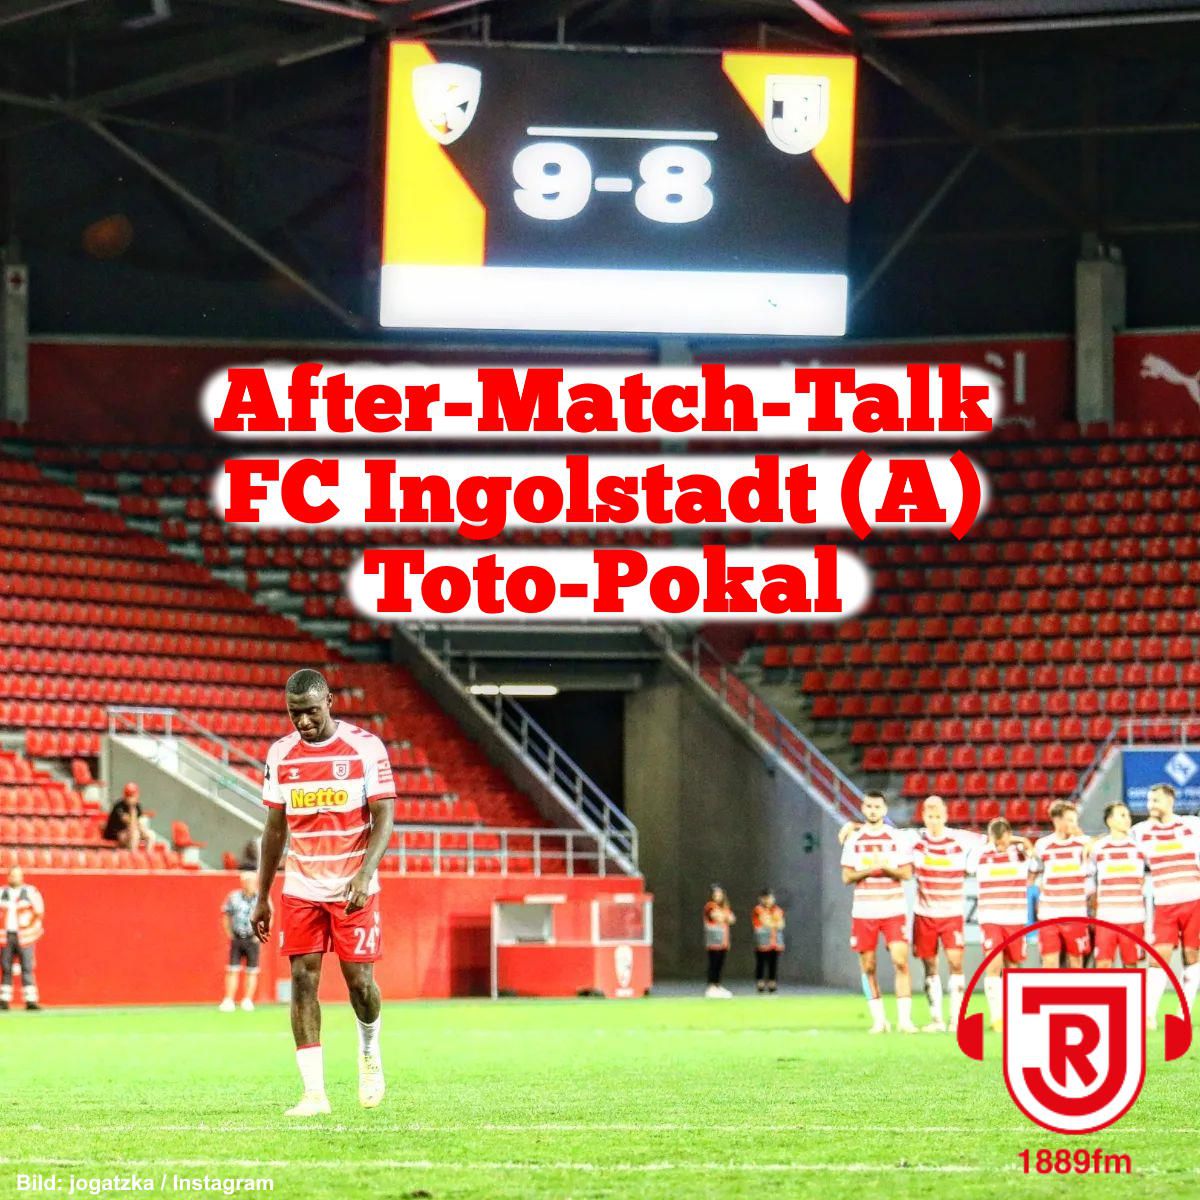 After-Match-Talk: FC Ingolstadt - SSV Jahn Regensburg (Toto-Pokal)